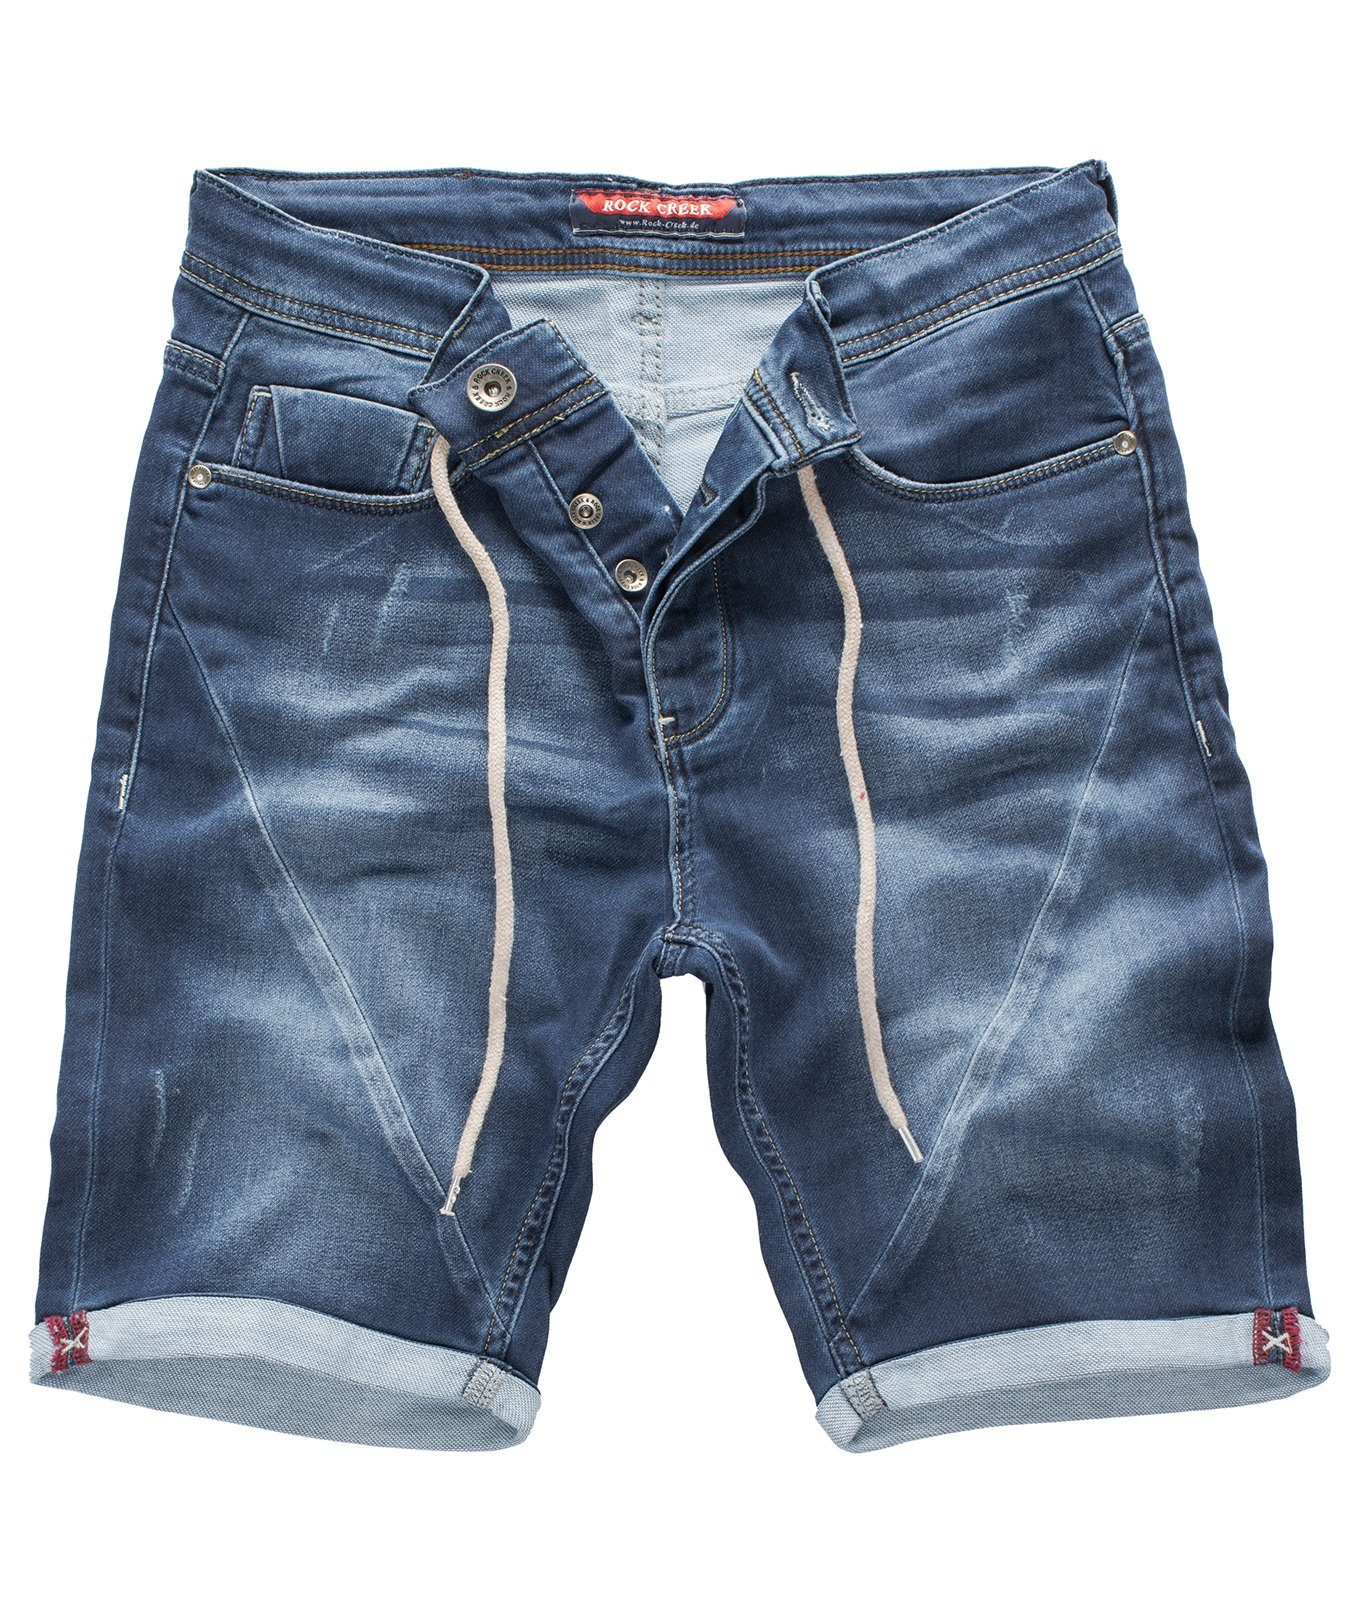 Jeansshorts Rock Jeans Herren Sweat Creek Royalblau Shorts Shorts RC-2200